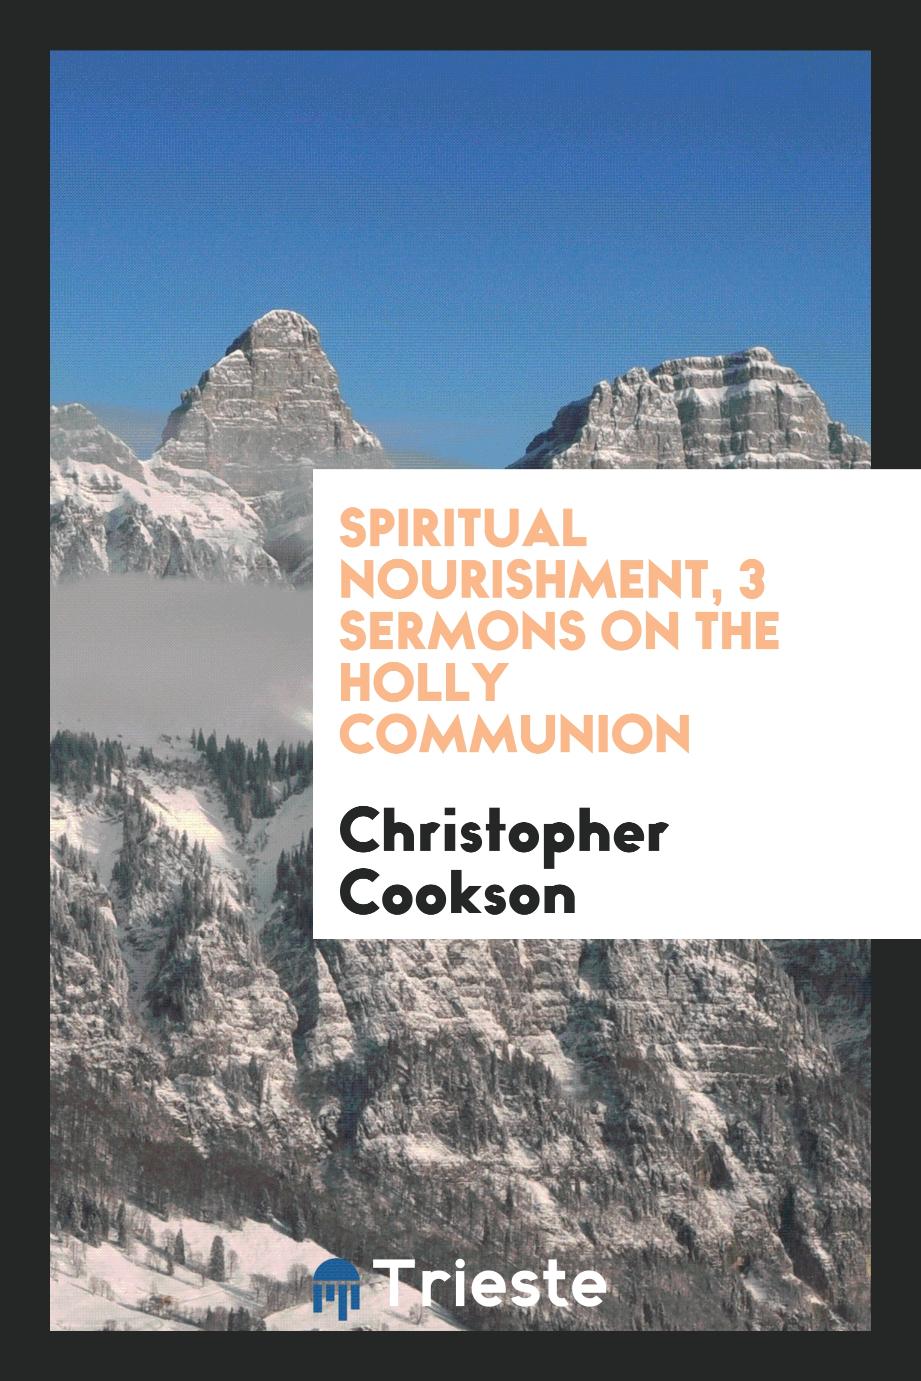 Spiritual nourishment, 3 sermons on the Holly Communion